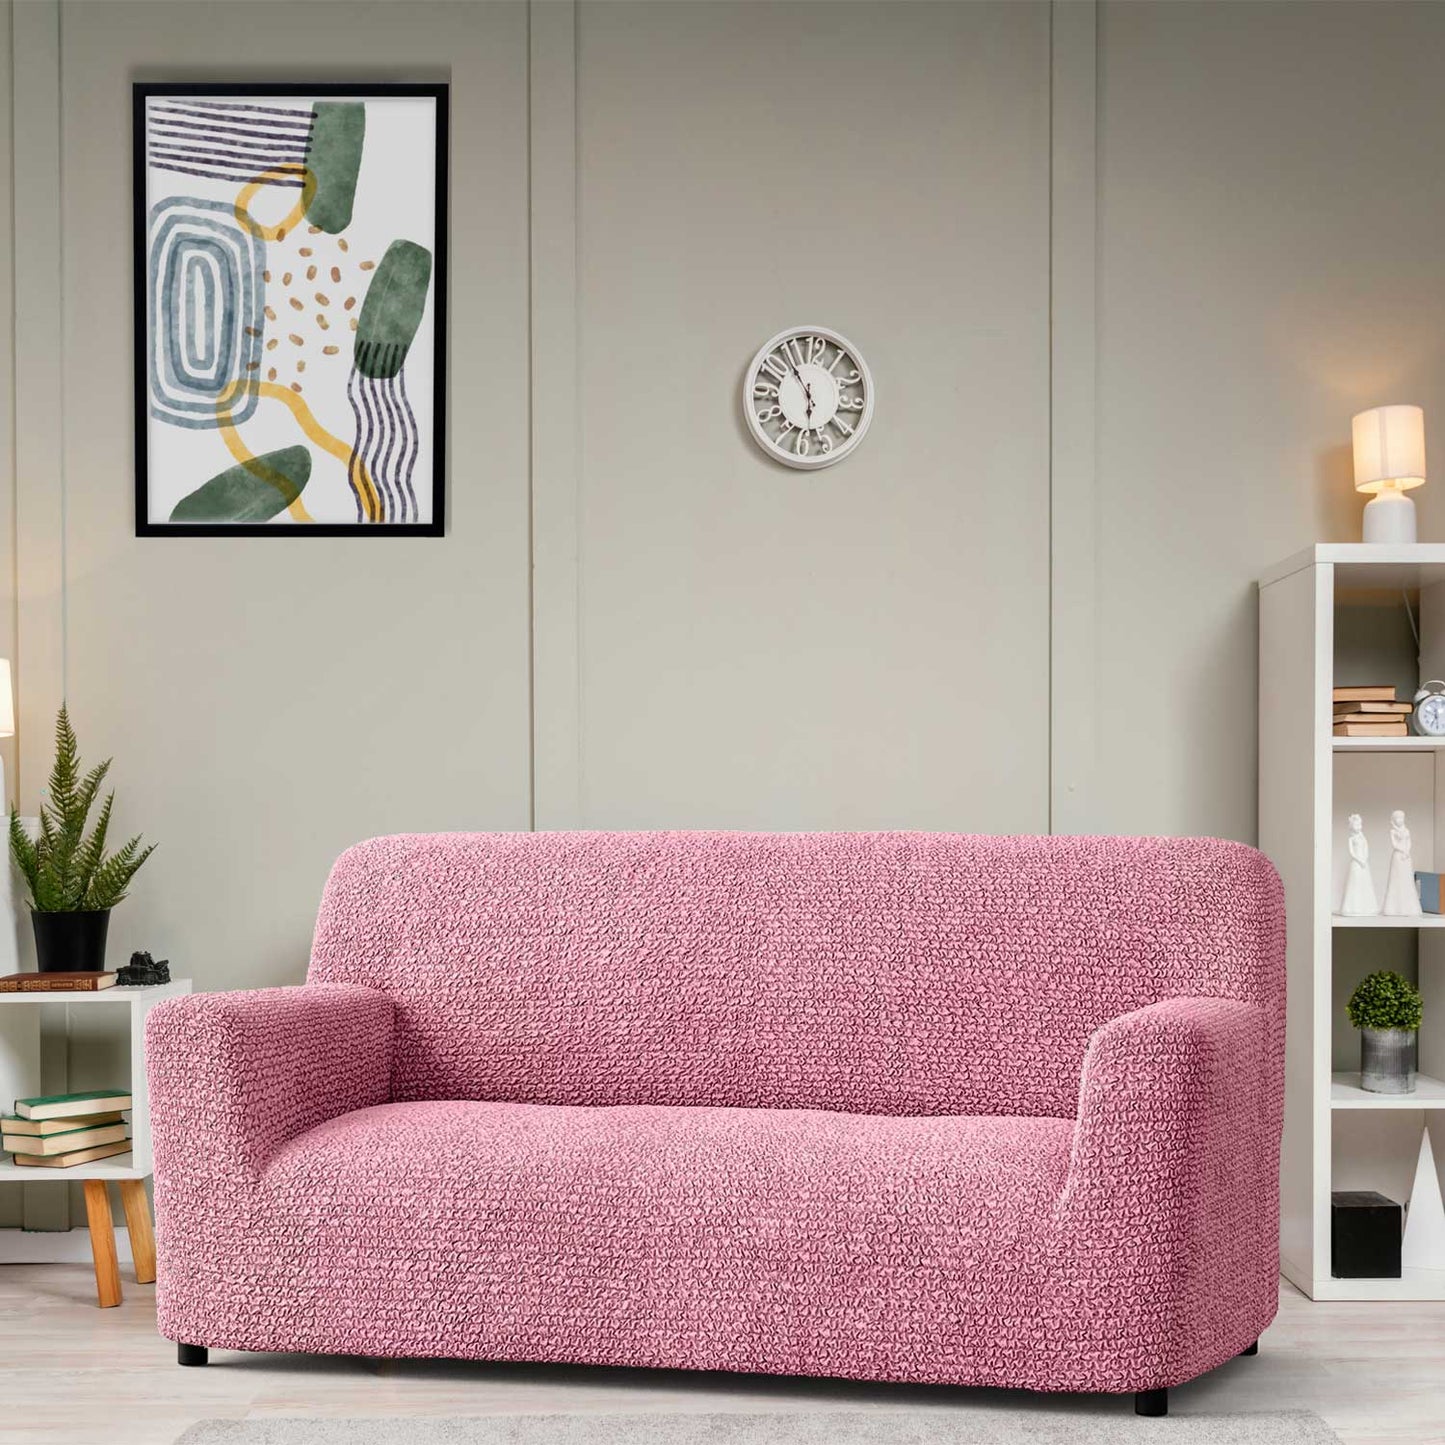 3 Seater Sofa Cover - Pink, Microfibra